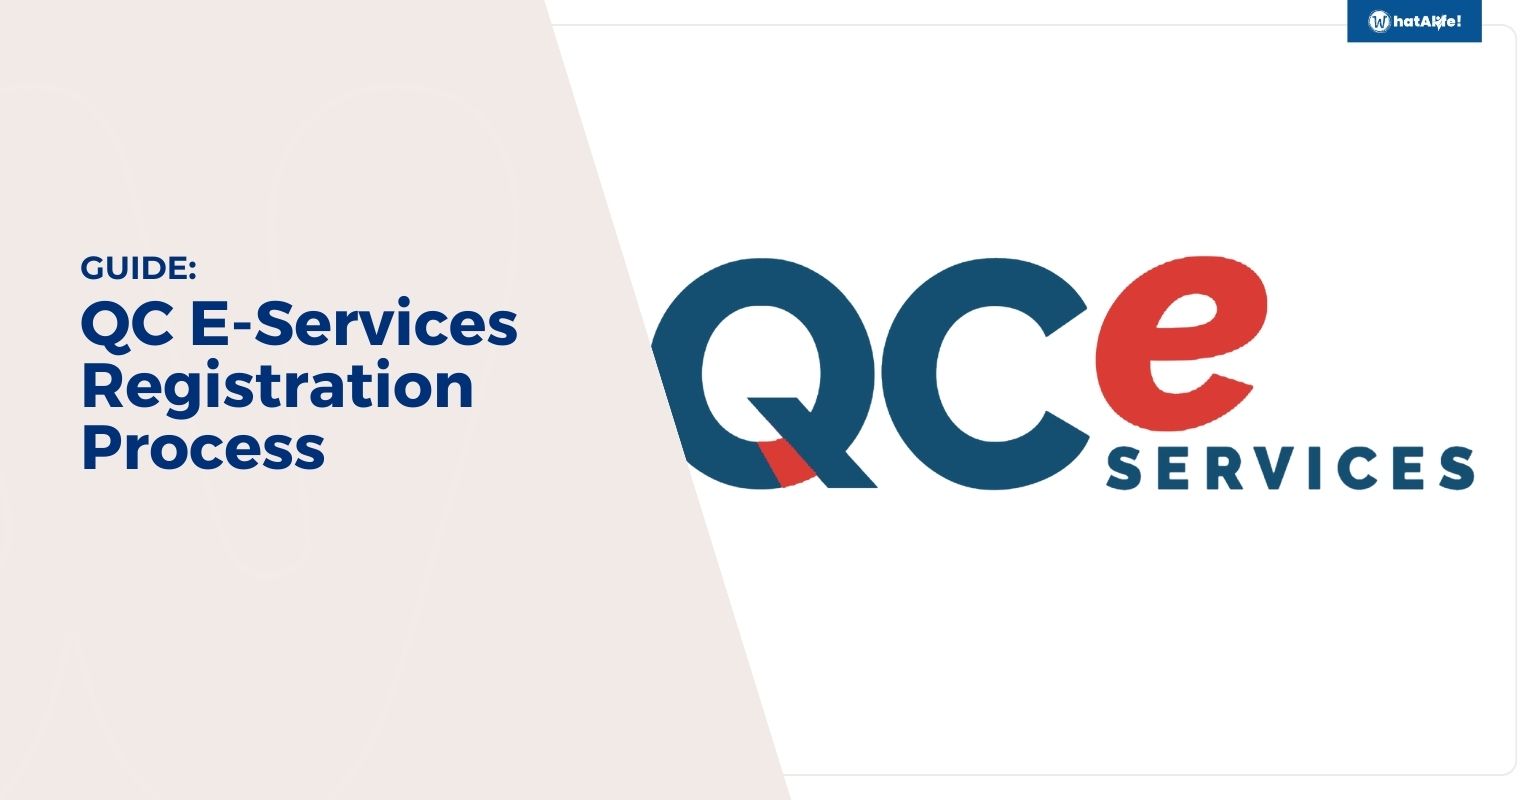 GUIDE: QC E-Services Registration Process